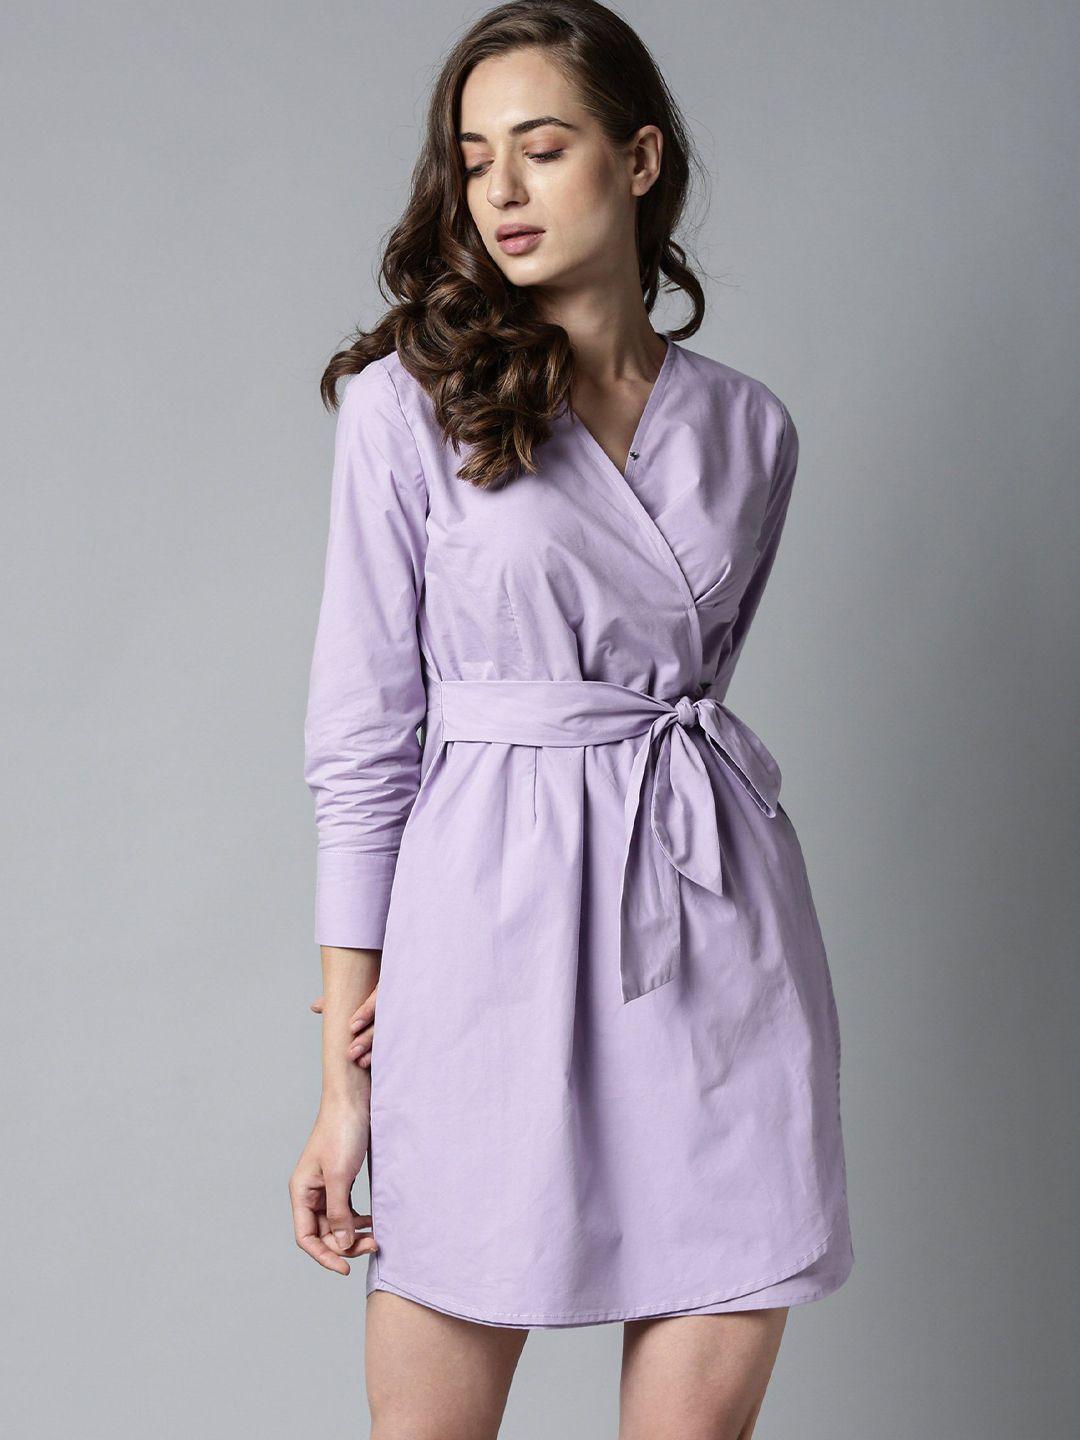 rareism women solid lavender wrap dress